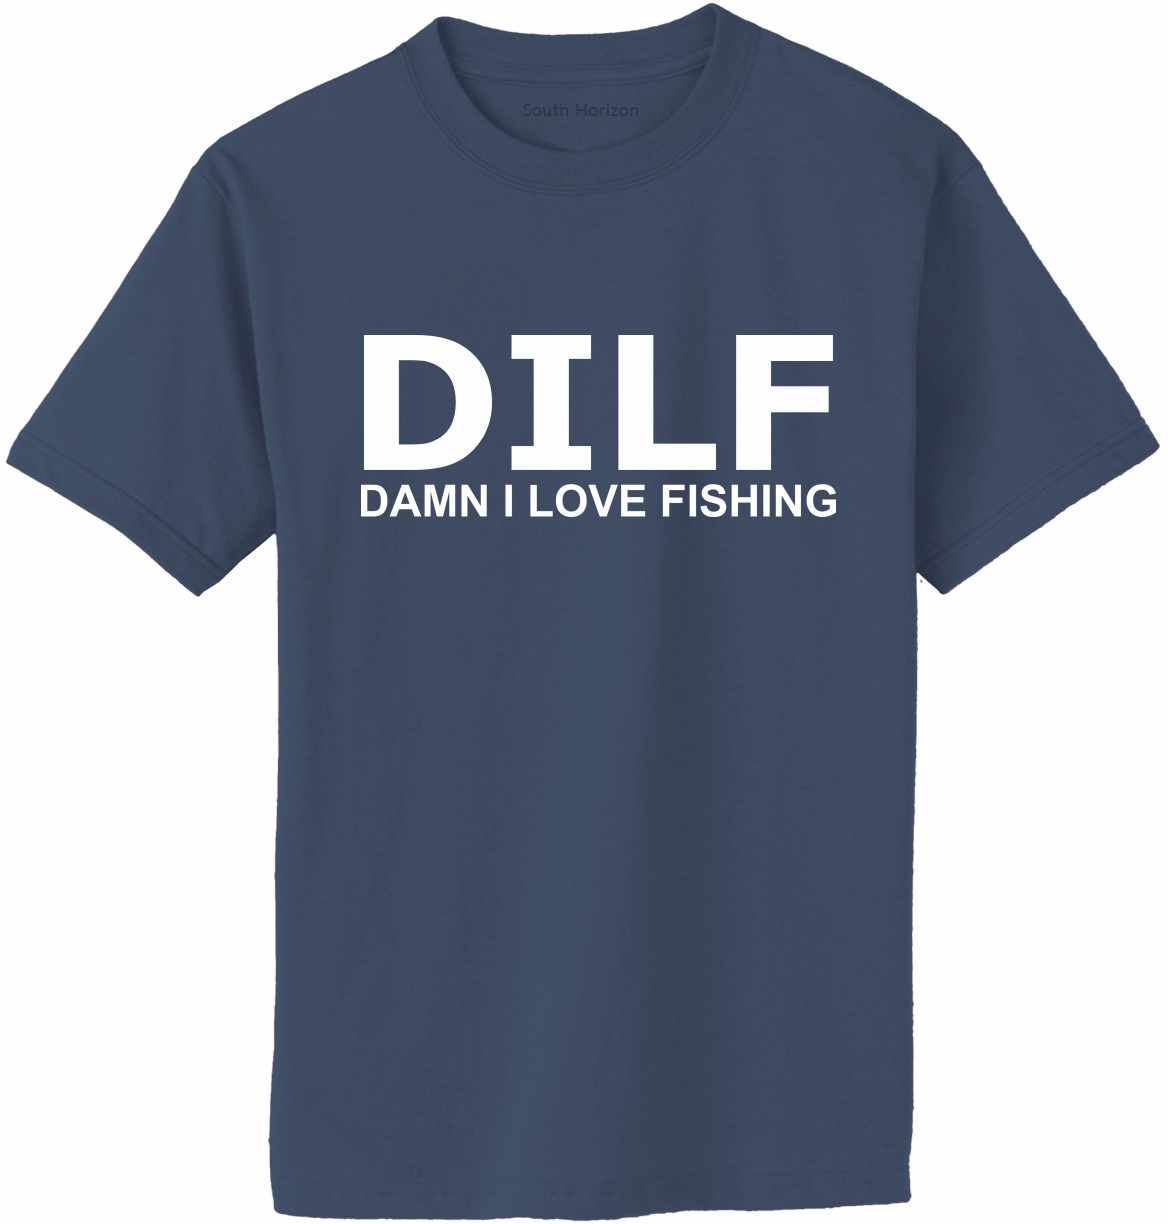 DILF Damn I Love Fishing on Adult T-Shirt (#1219-1)